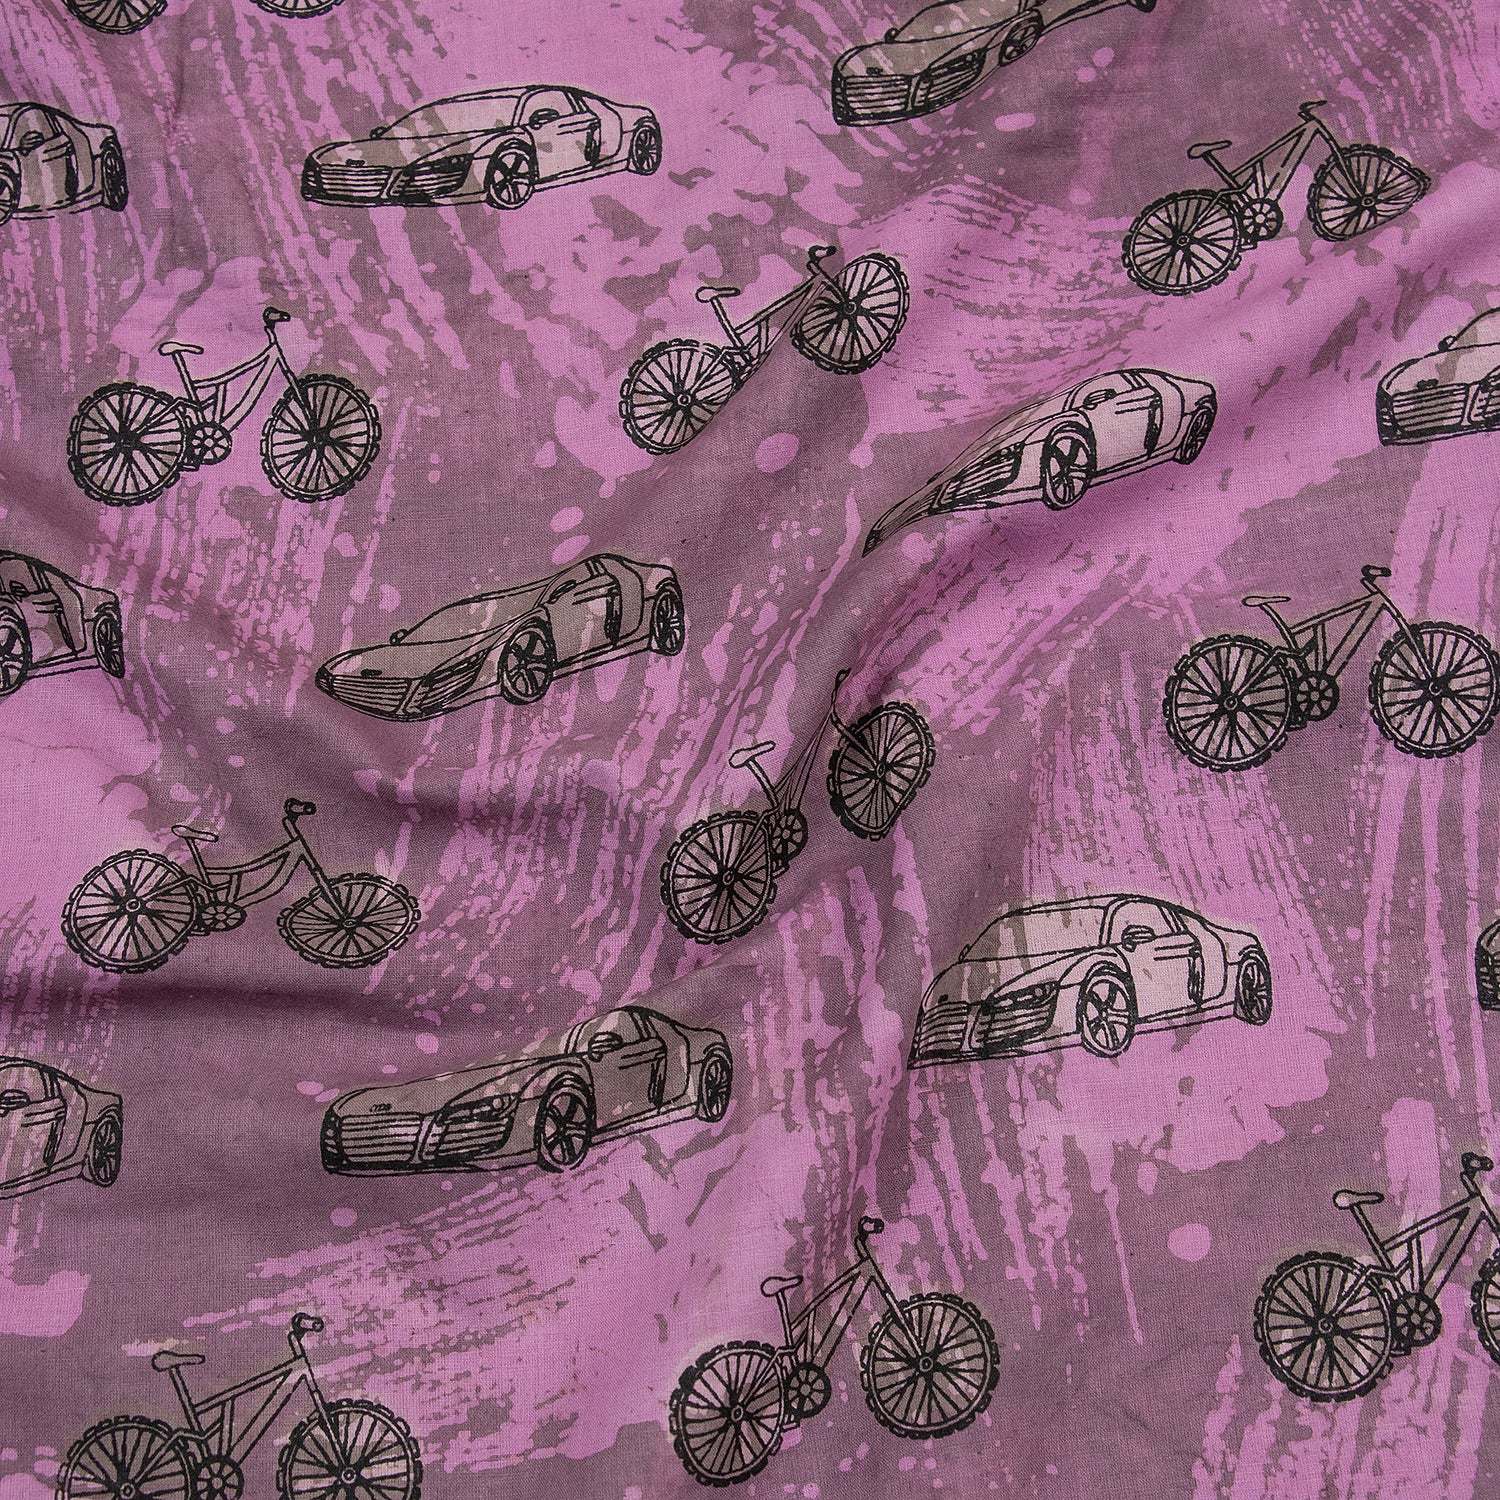 Bicycle and Car Print Block Printed Cotton Fabric